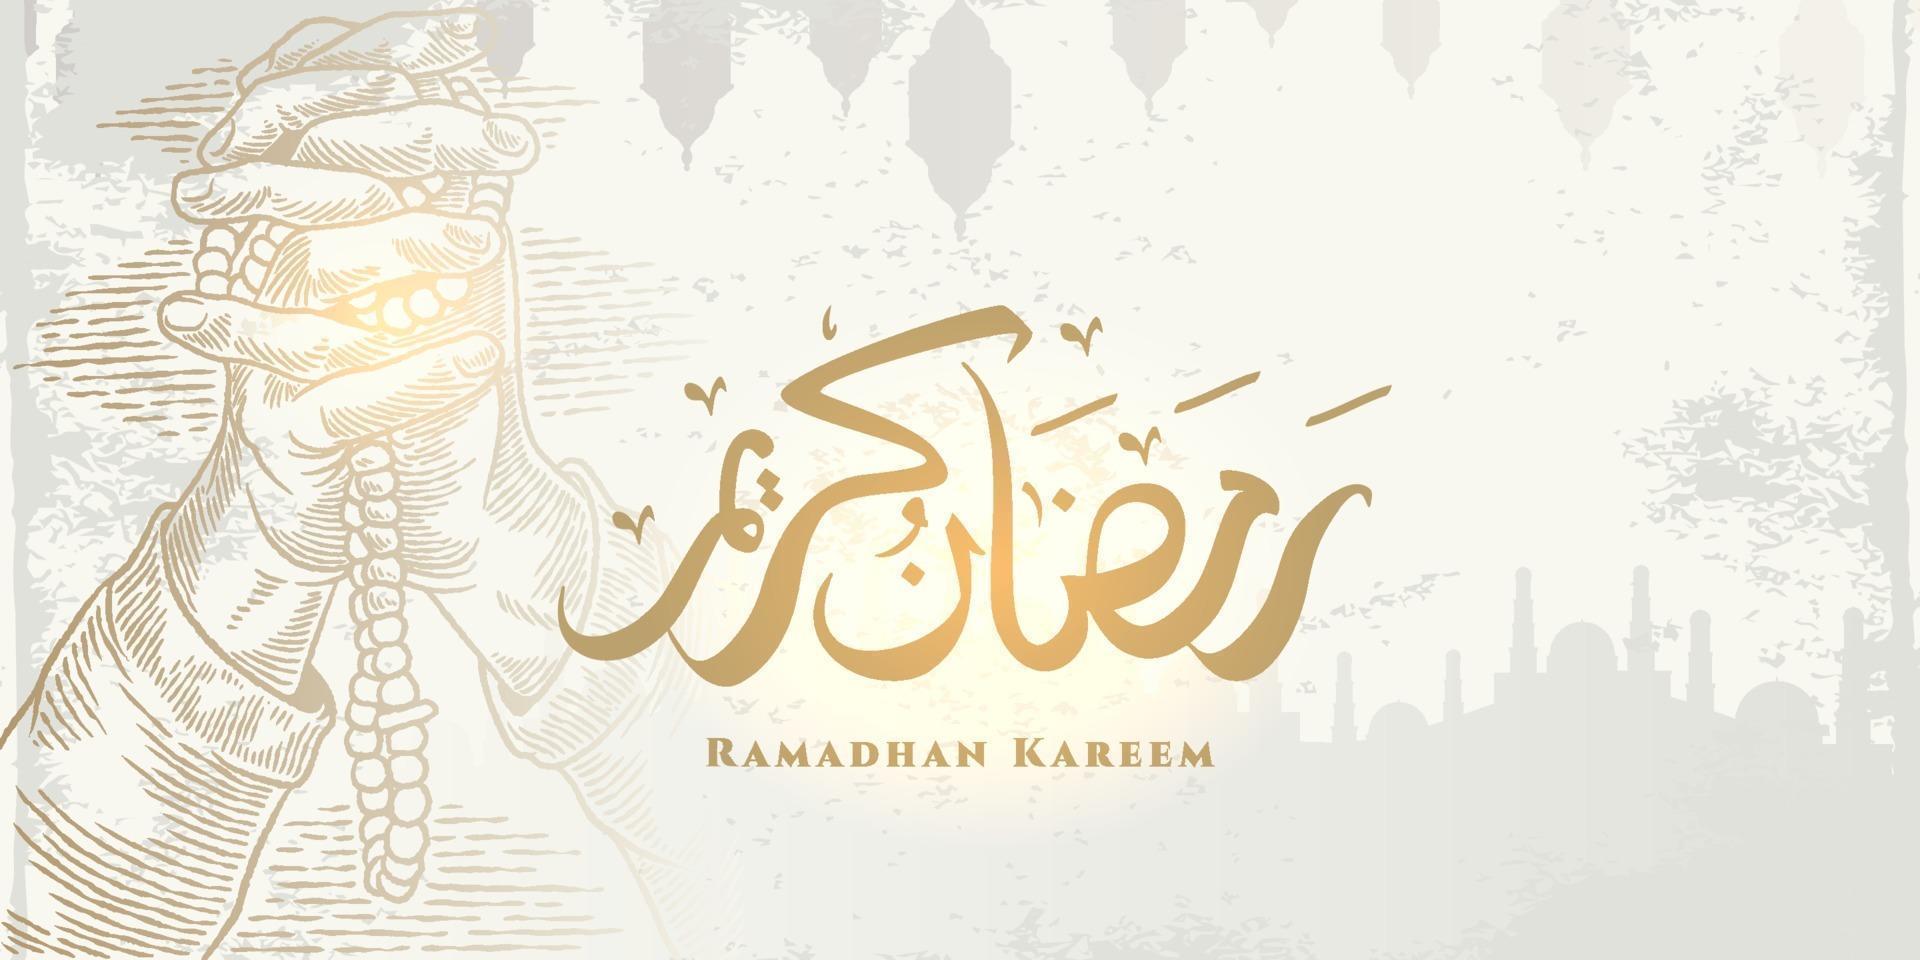 Tarjeta de felicitación de Ramadán Kareem con gran mezquita, boceto de oración a mano y caligrafía árabe significa Ramadán de acebo. boceto dibujado a mano elegante diseño aislado sobre fondo blanco. vector